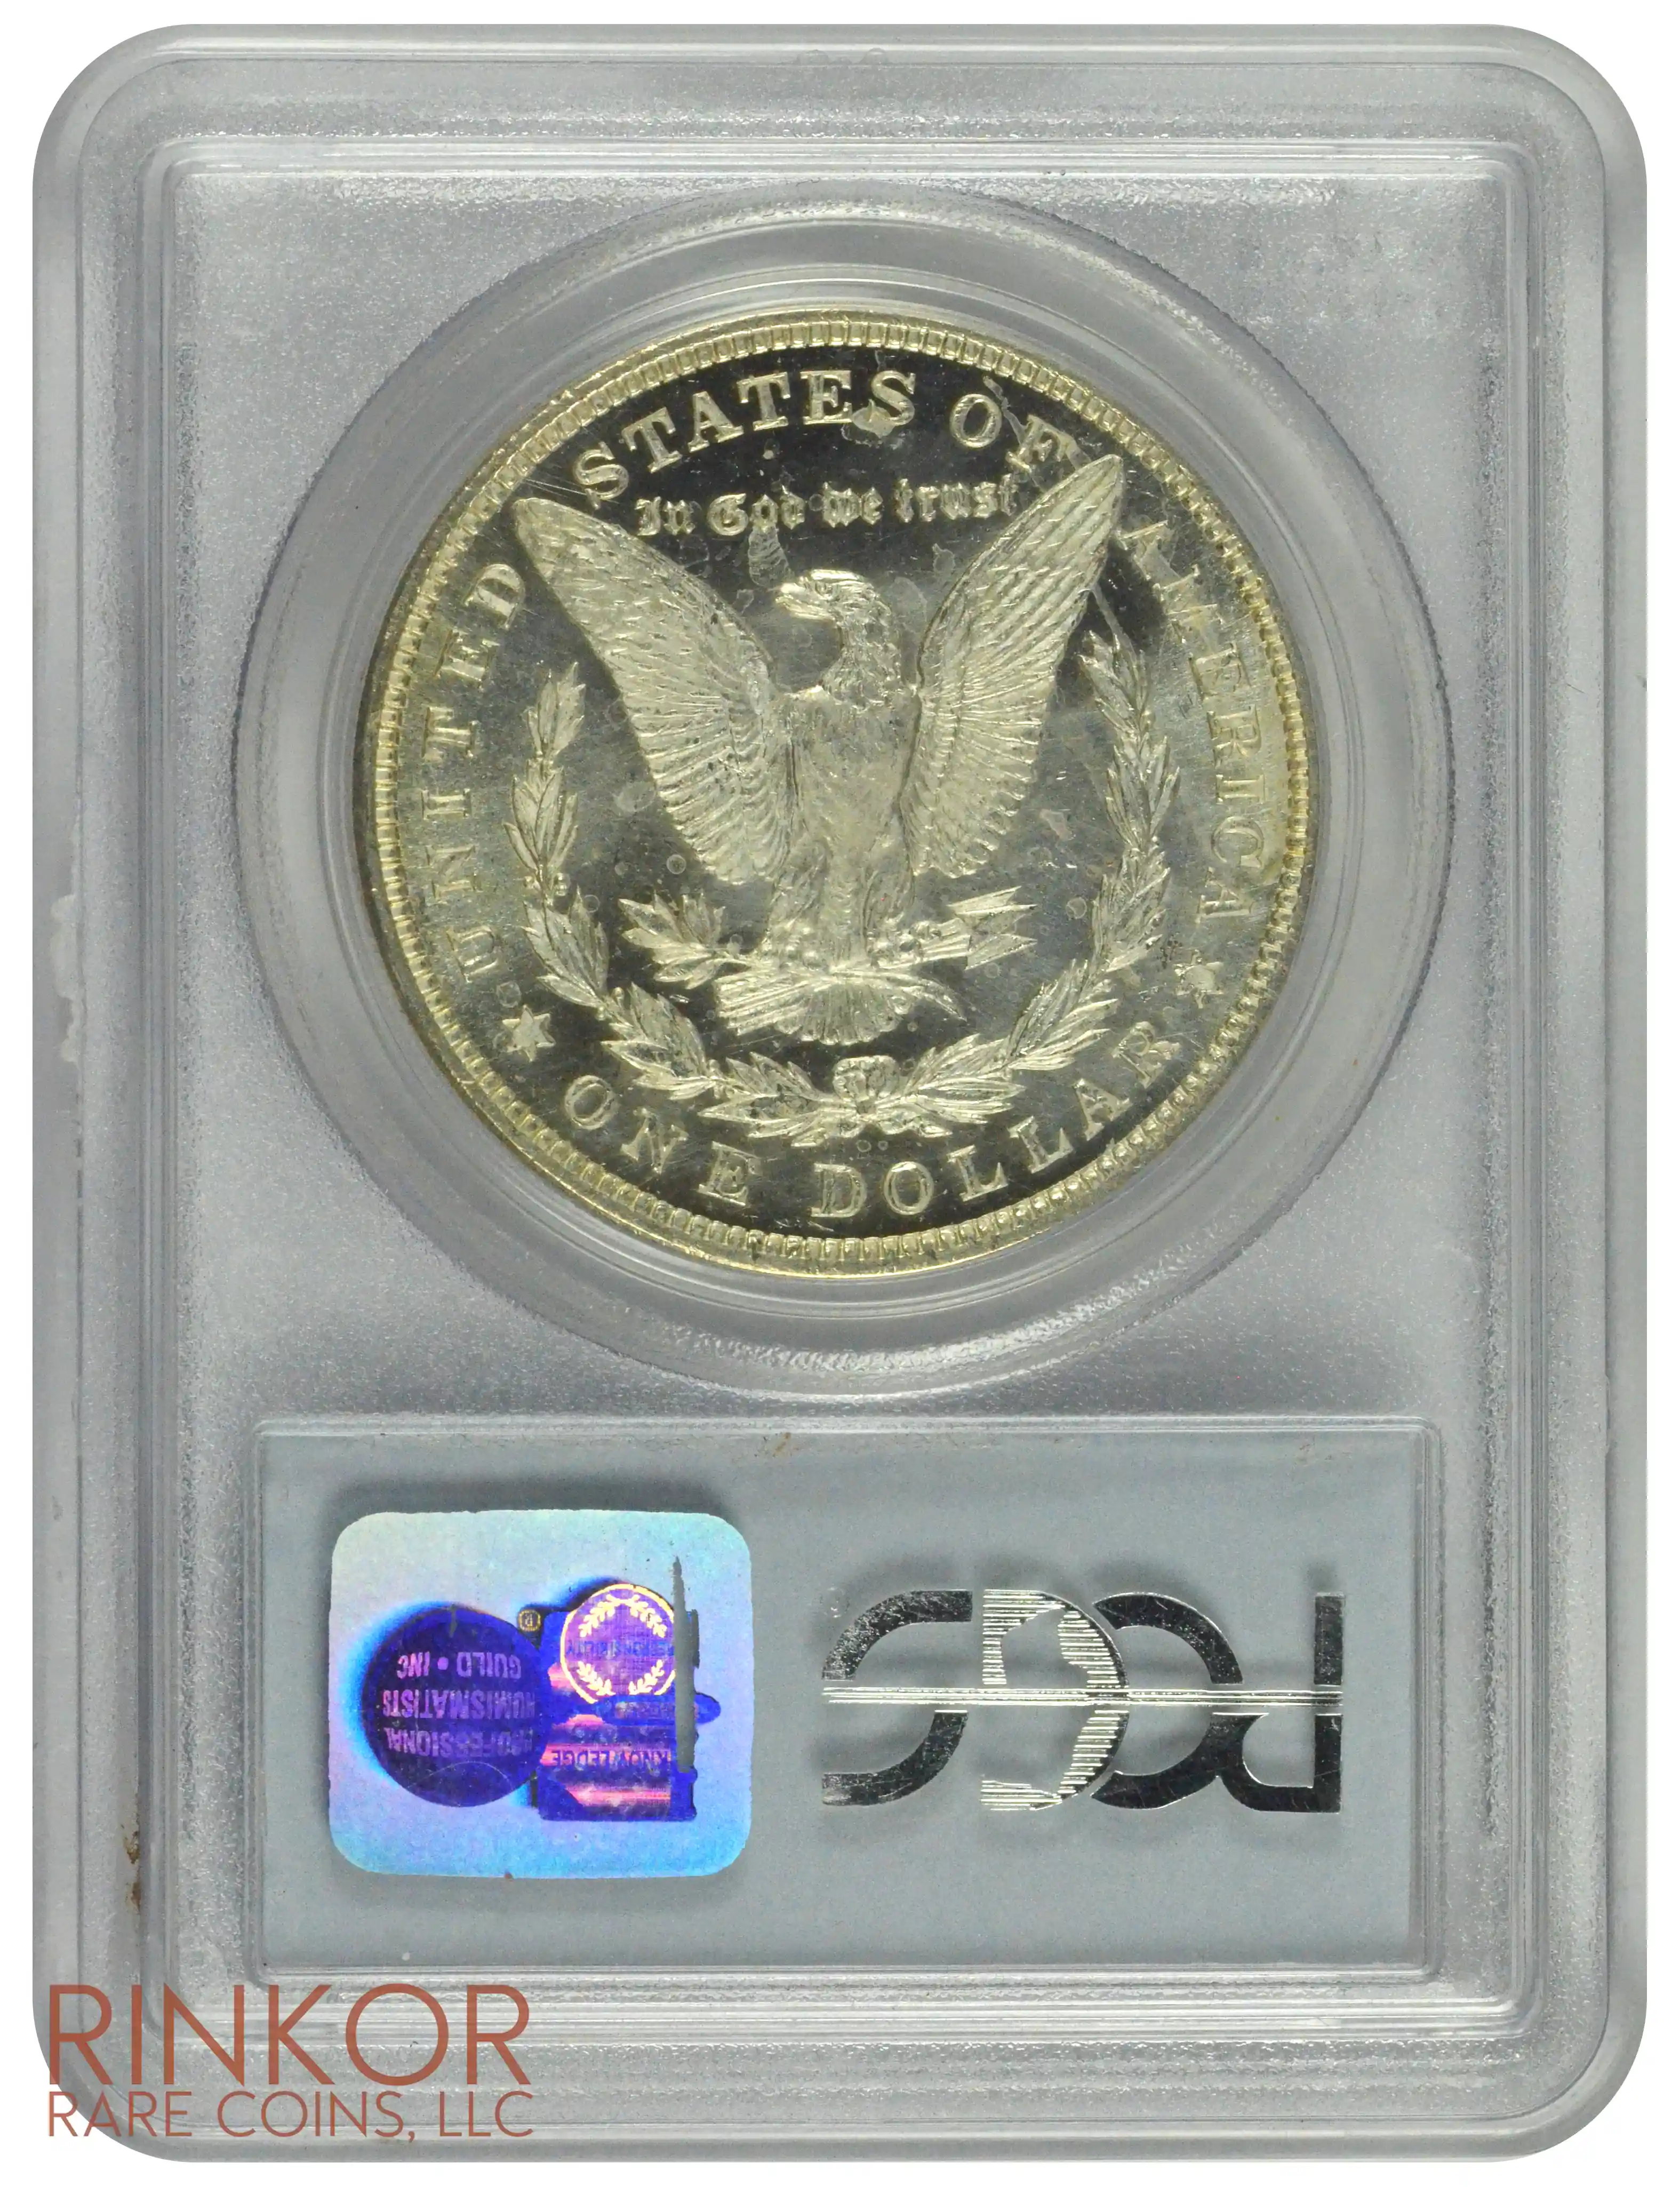 1921 $1 Morgan Dollar PCGS MS 65 PL CAC